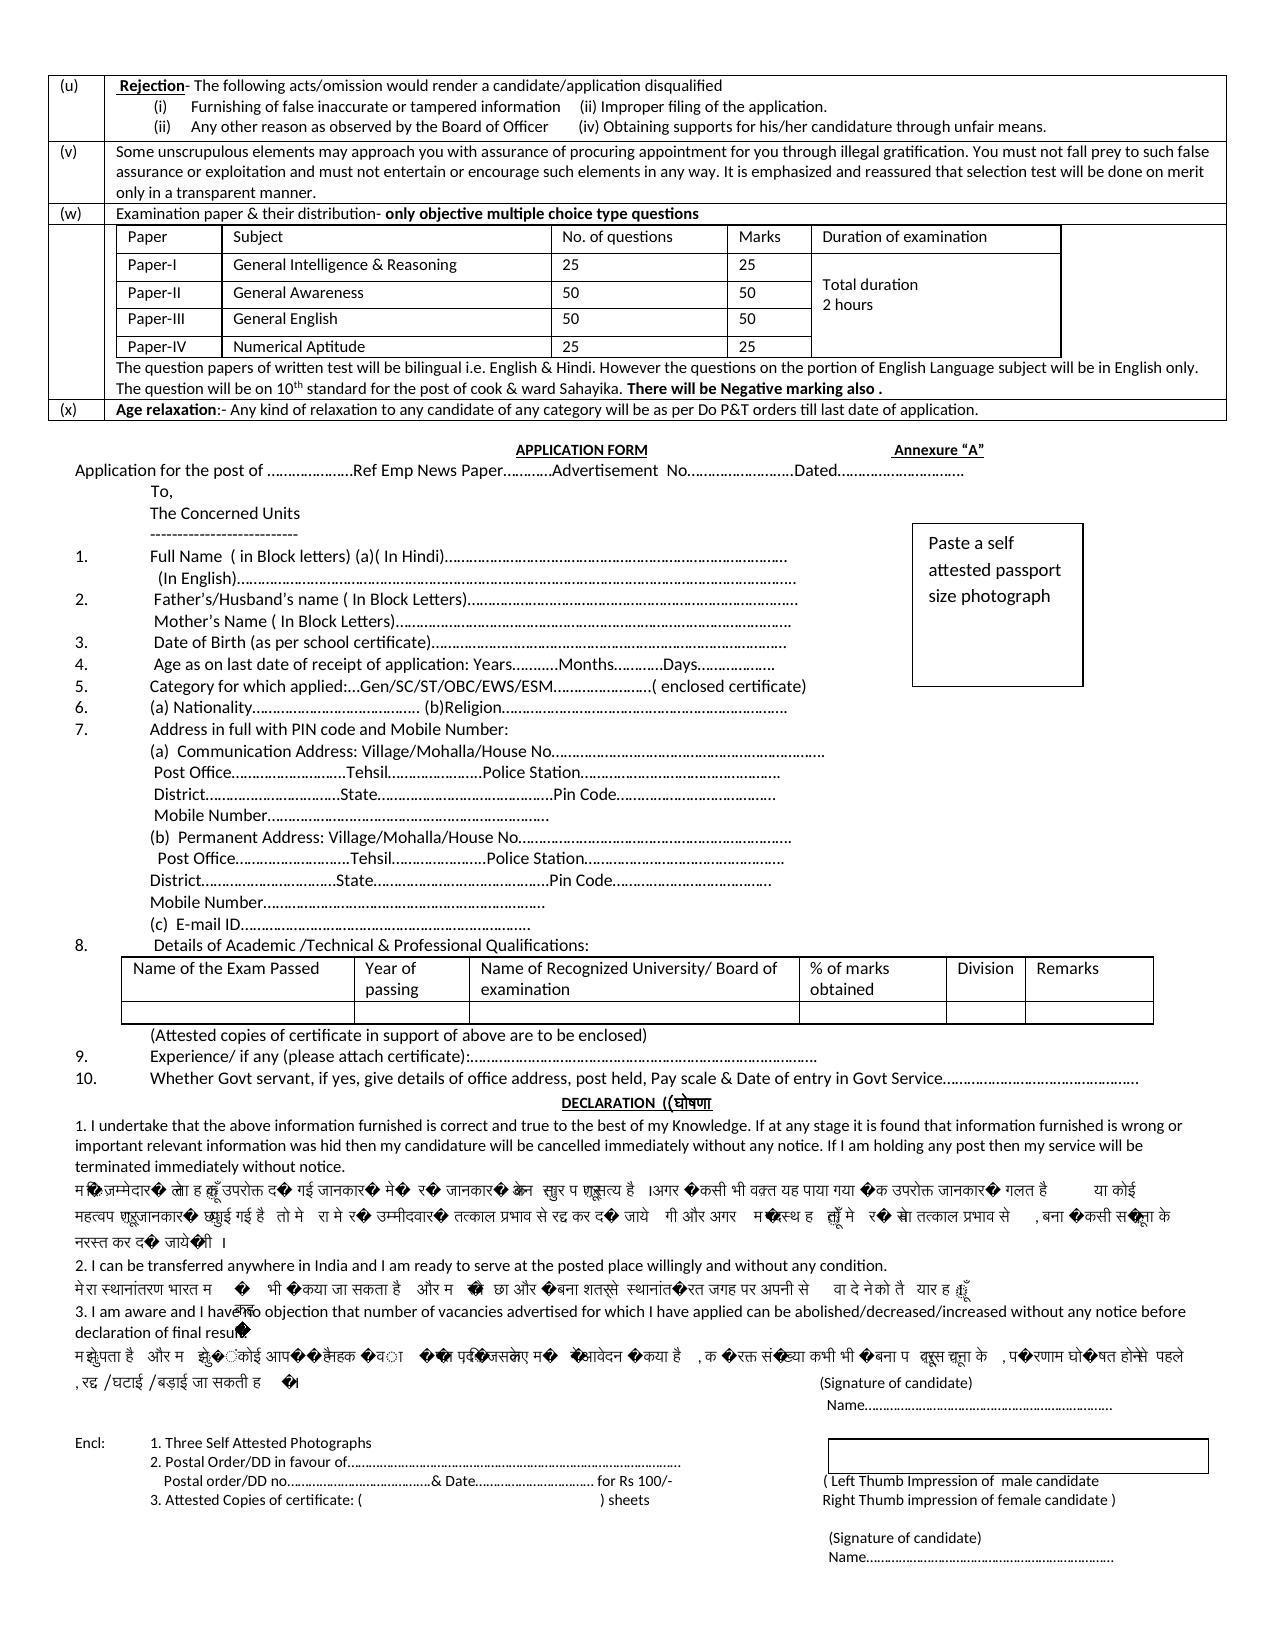 Military Hospital Ahmednagar Cook, Ward Sahayika Recruitment 2022 - Page 1